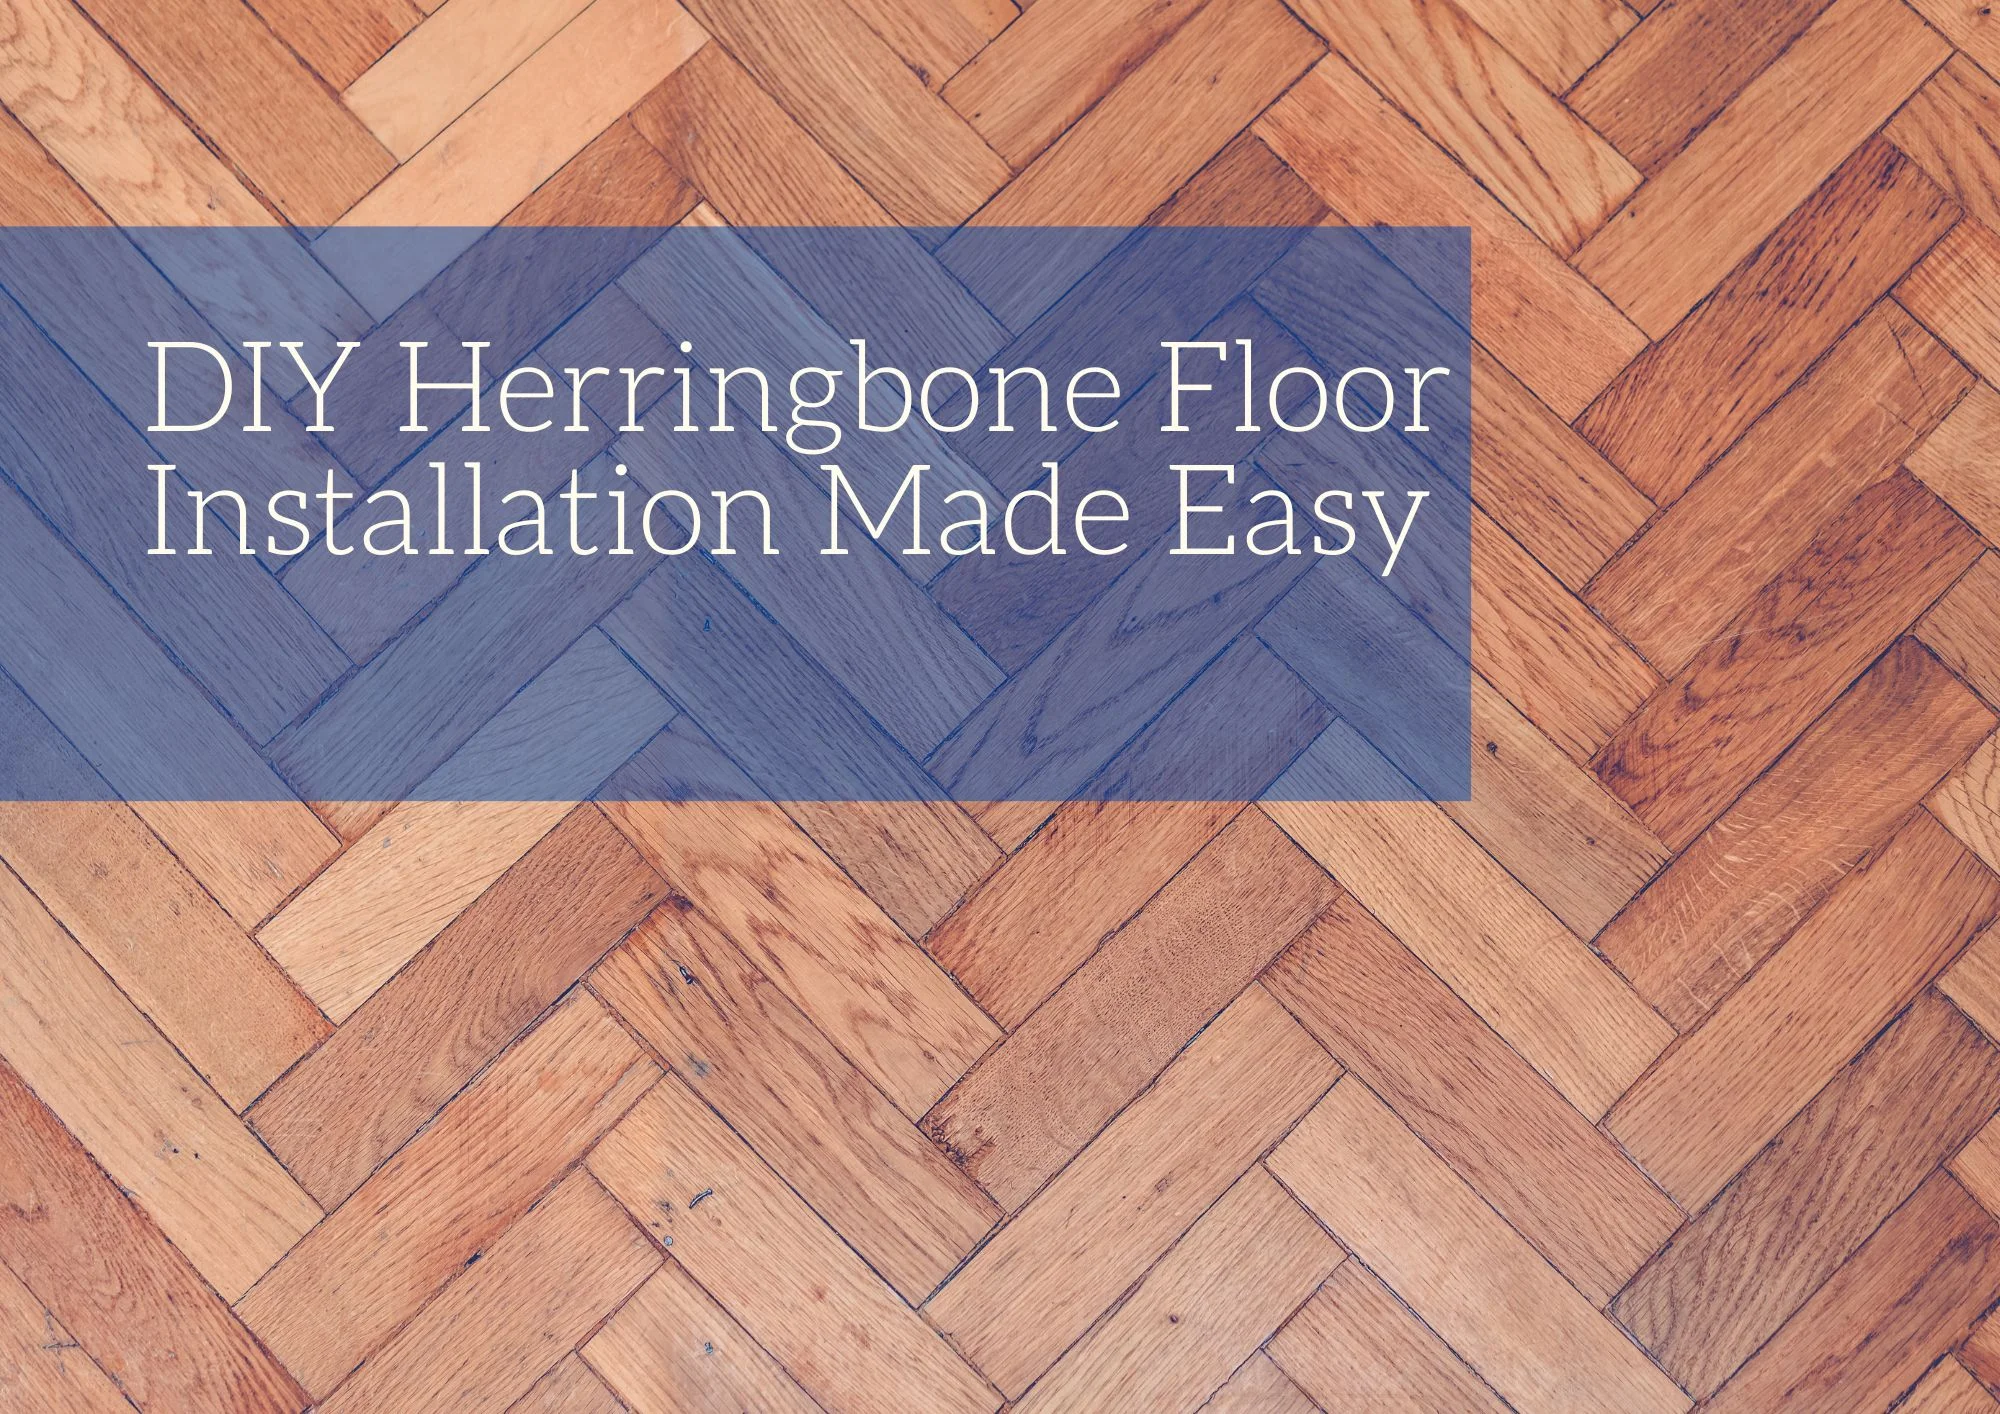 DIY Herringbone Floor Installation Made Easy